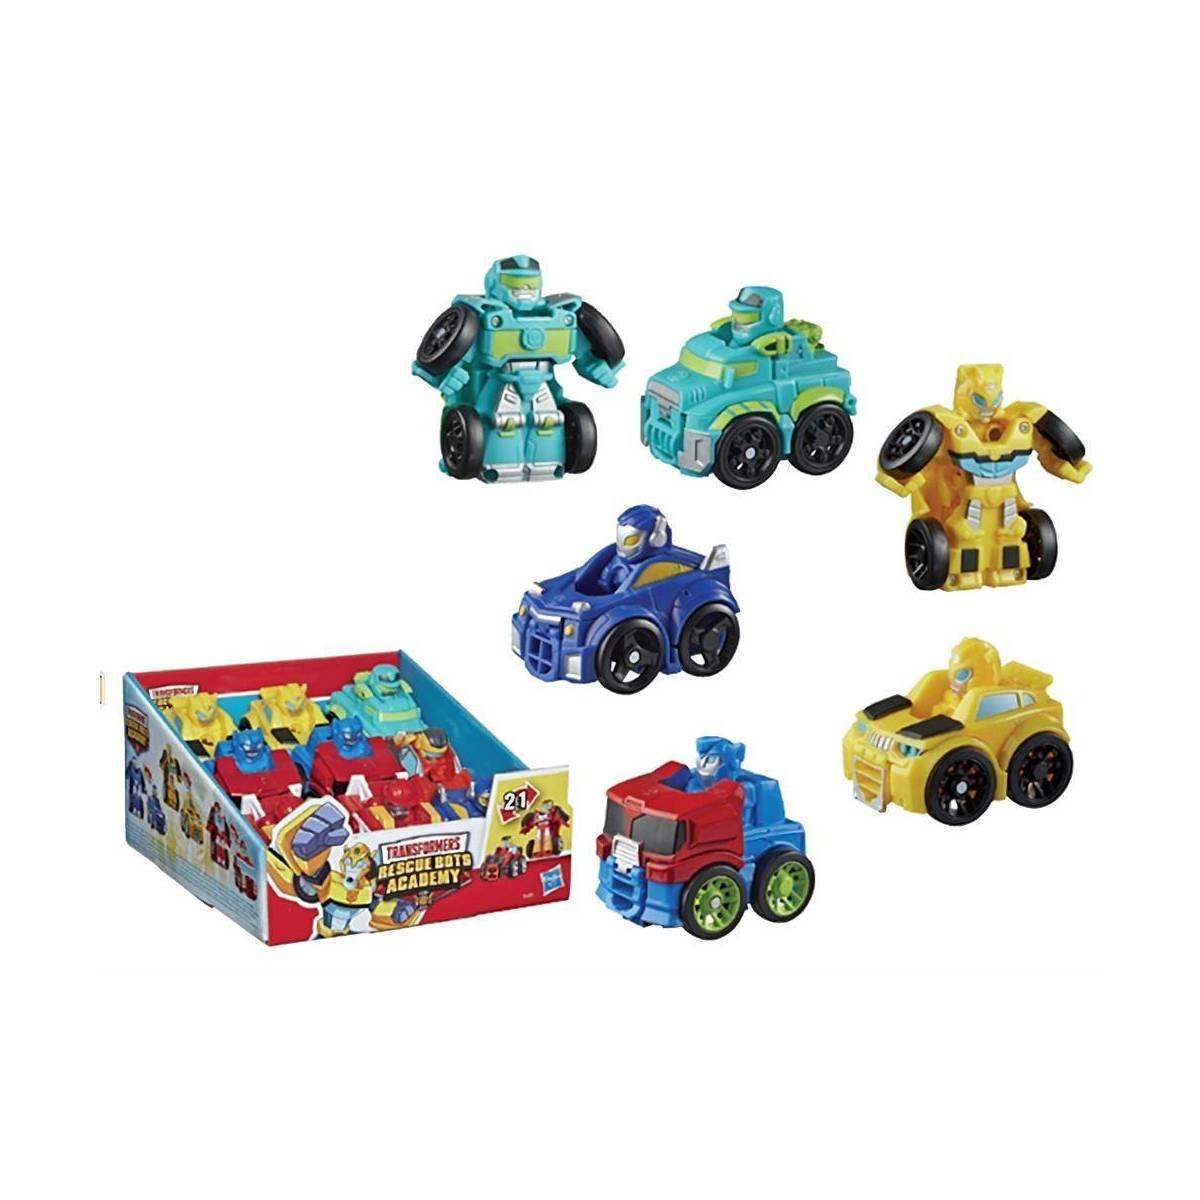 Mini-Roboter Transformers Rescue Bots Academy 2 de 1